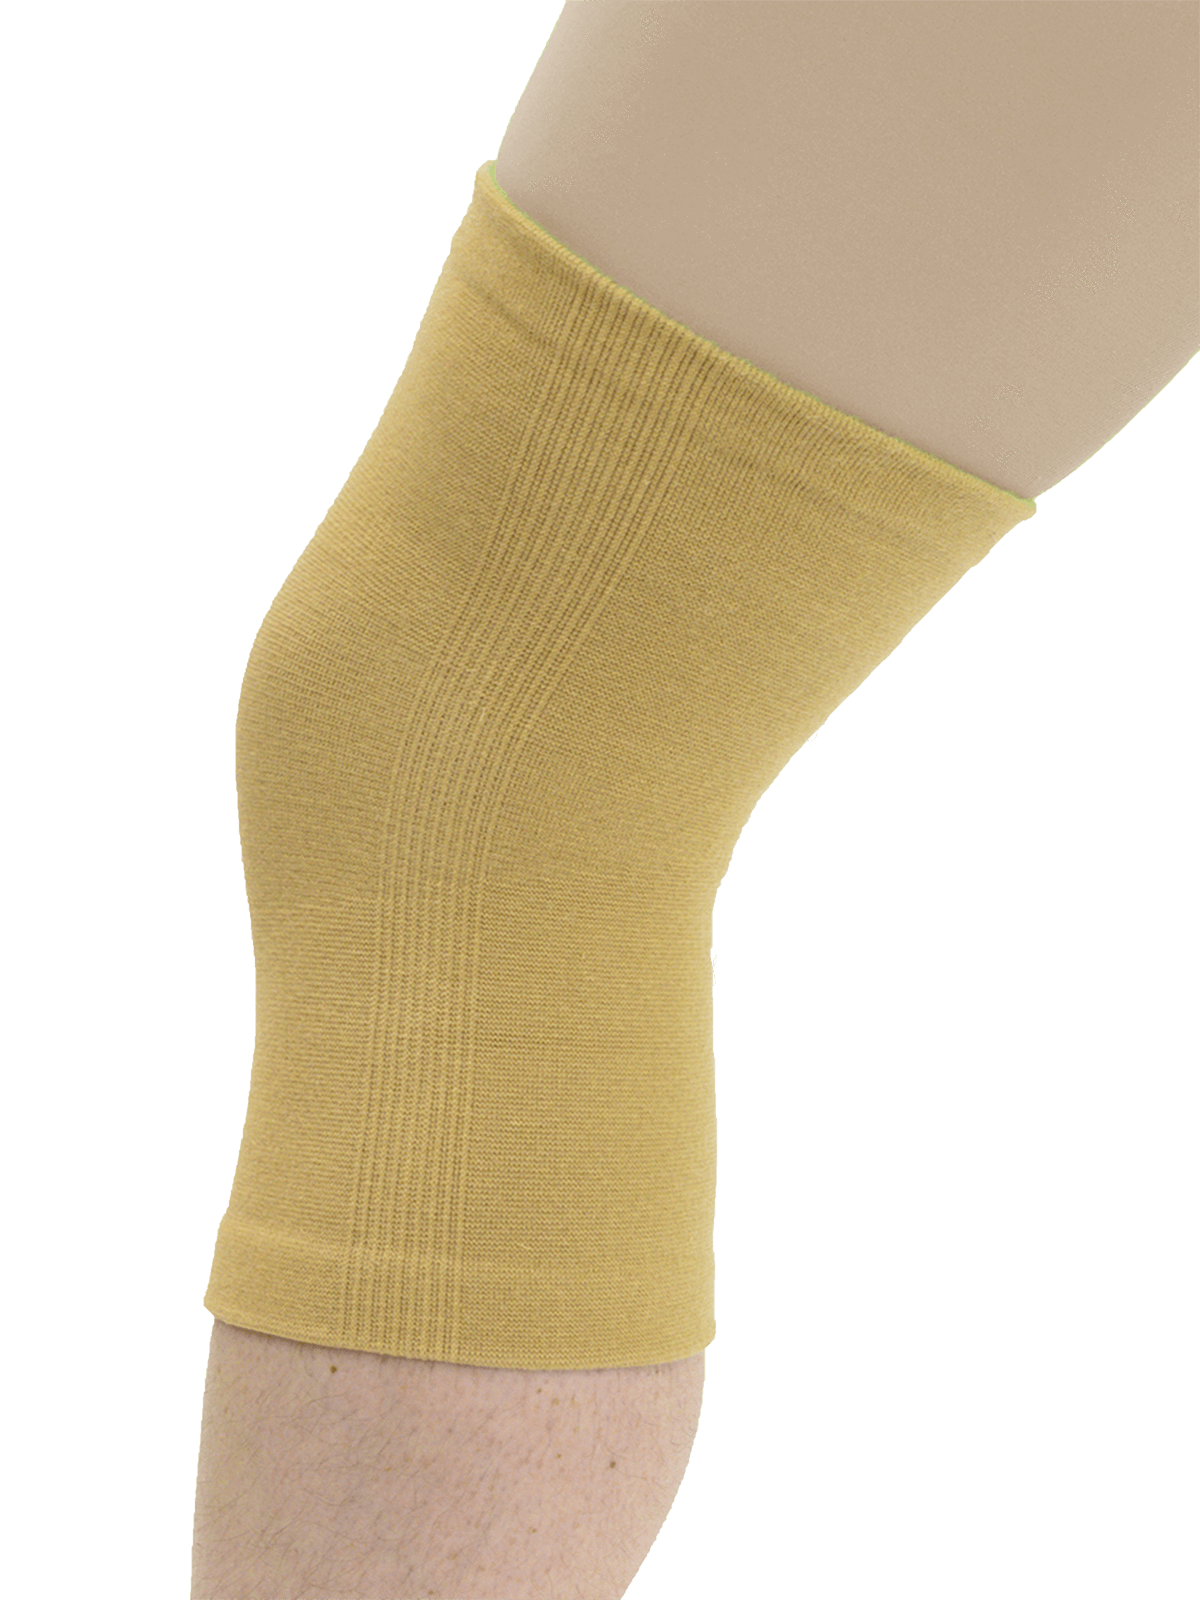 MAXAR Angora/Wool Soft Knee Sleeve Support Brace